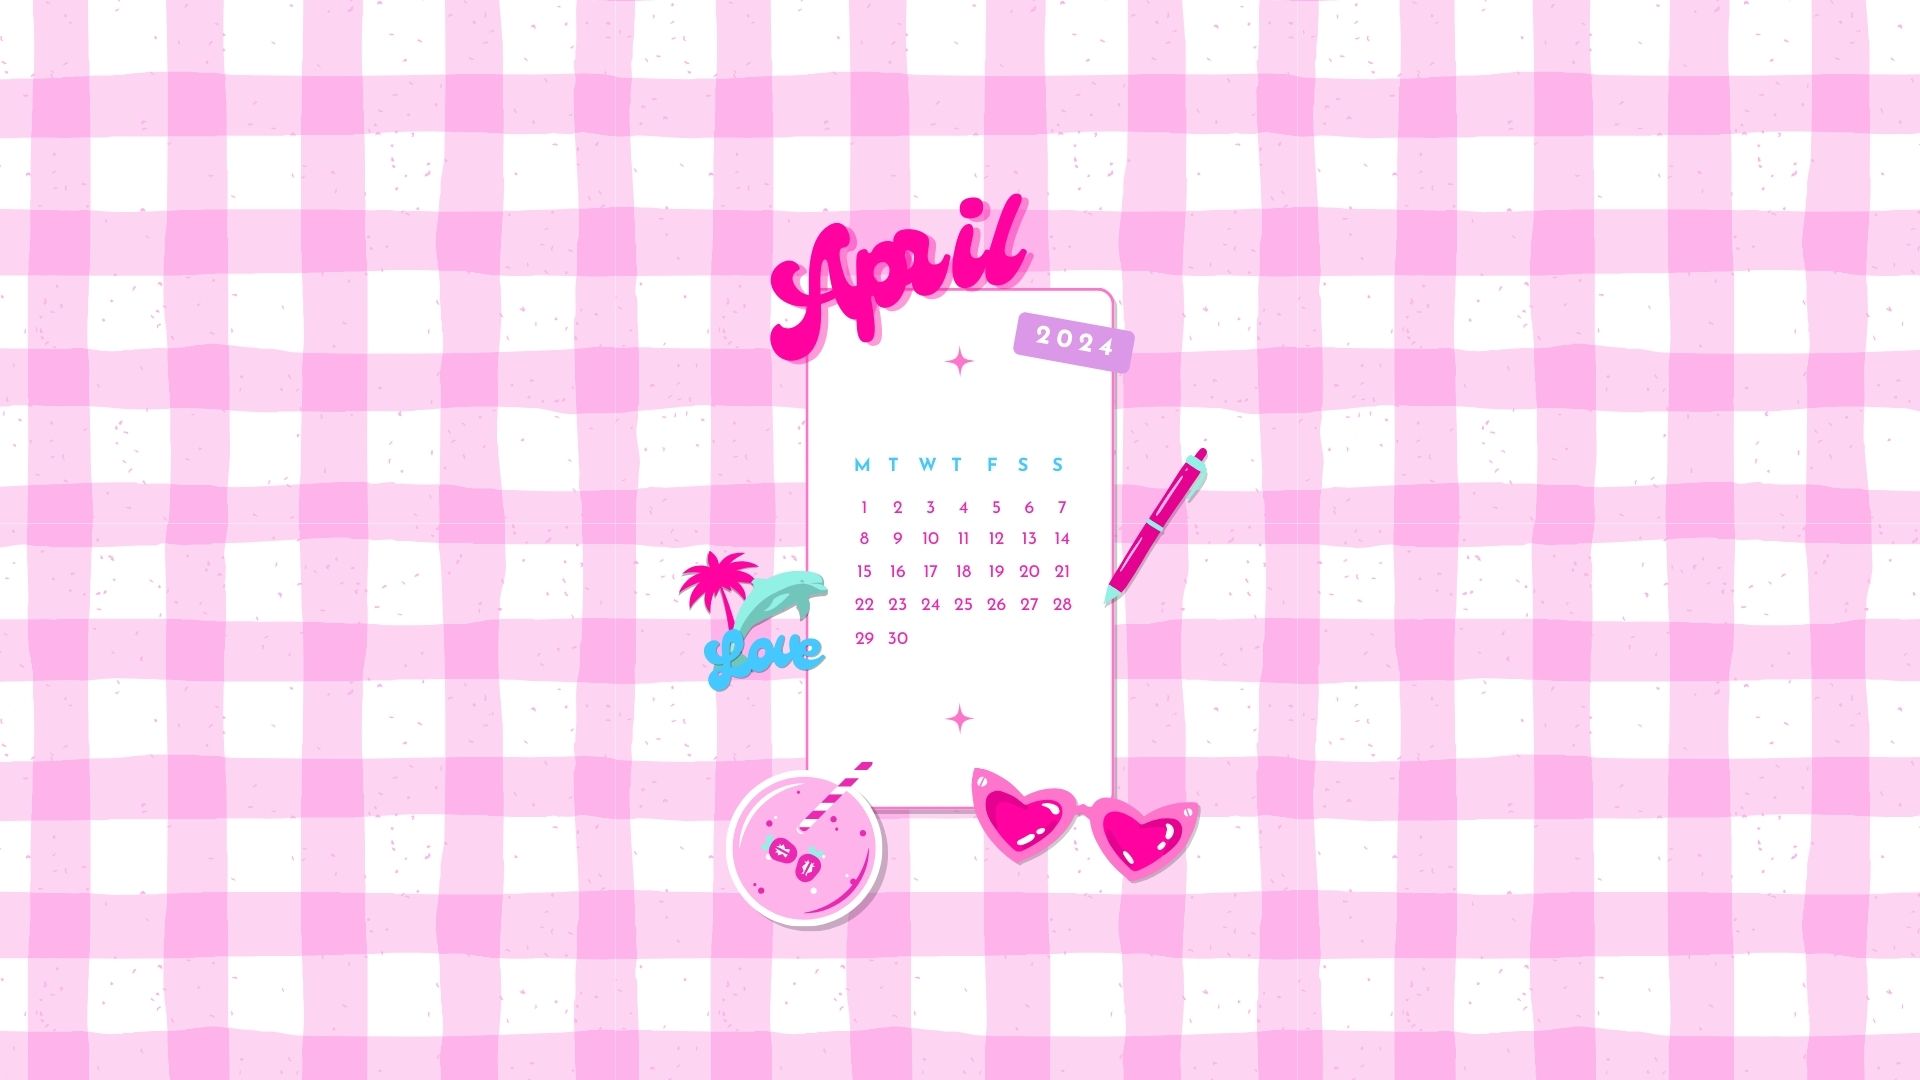 may 2024 barbiecore aesthetic desktop background wallpaper calendar